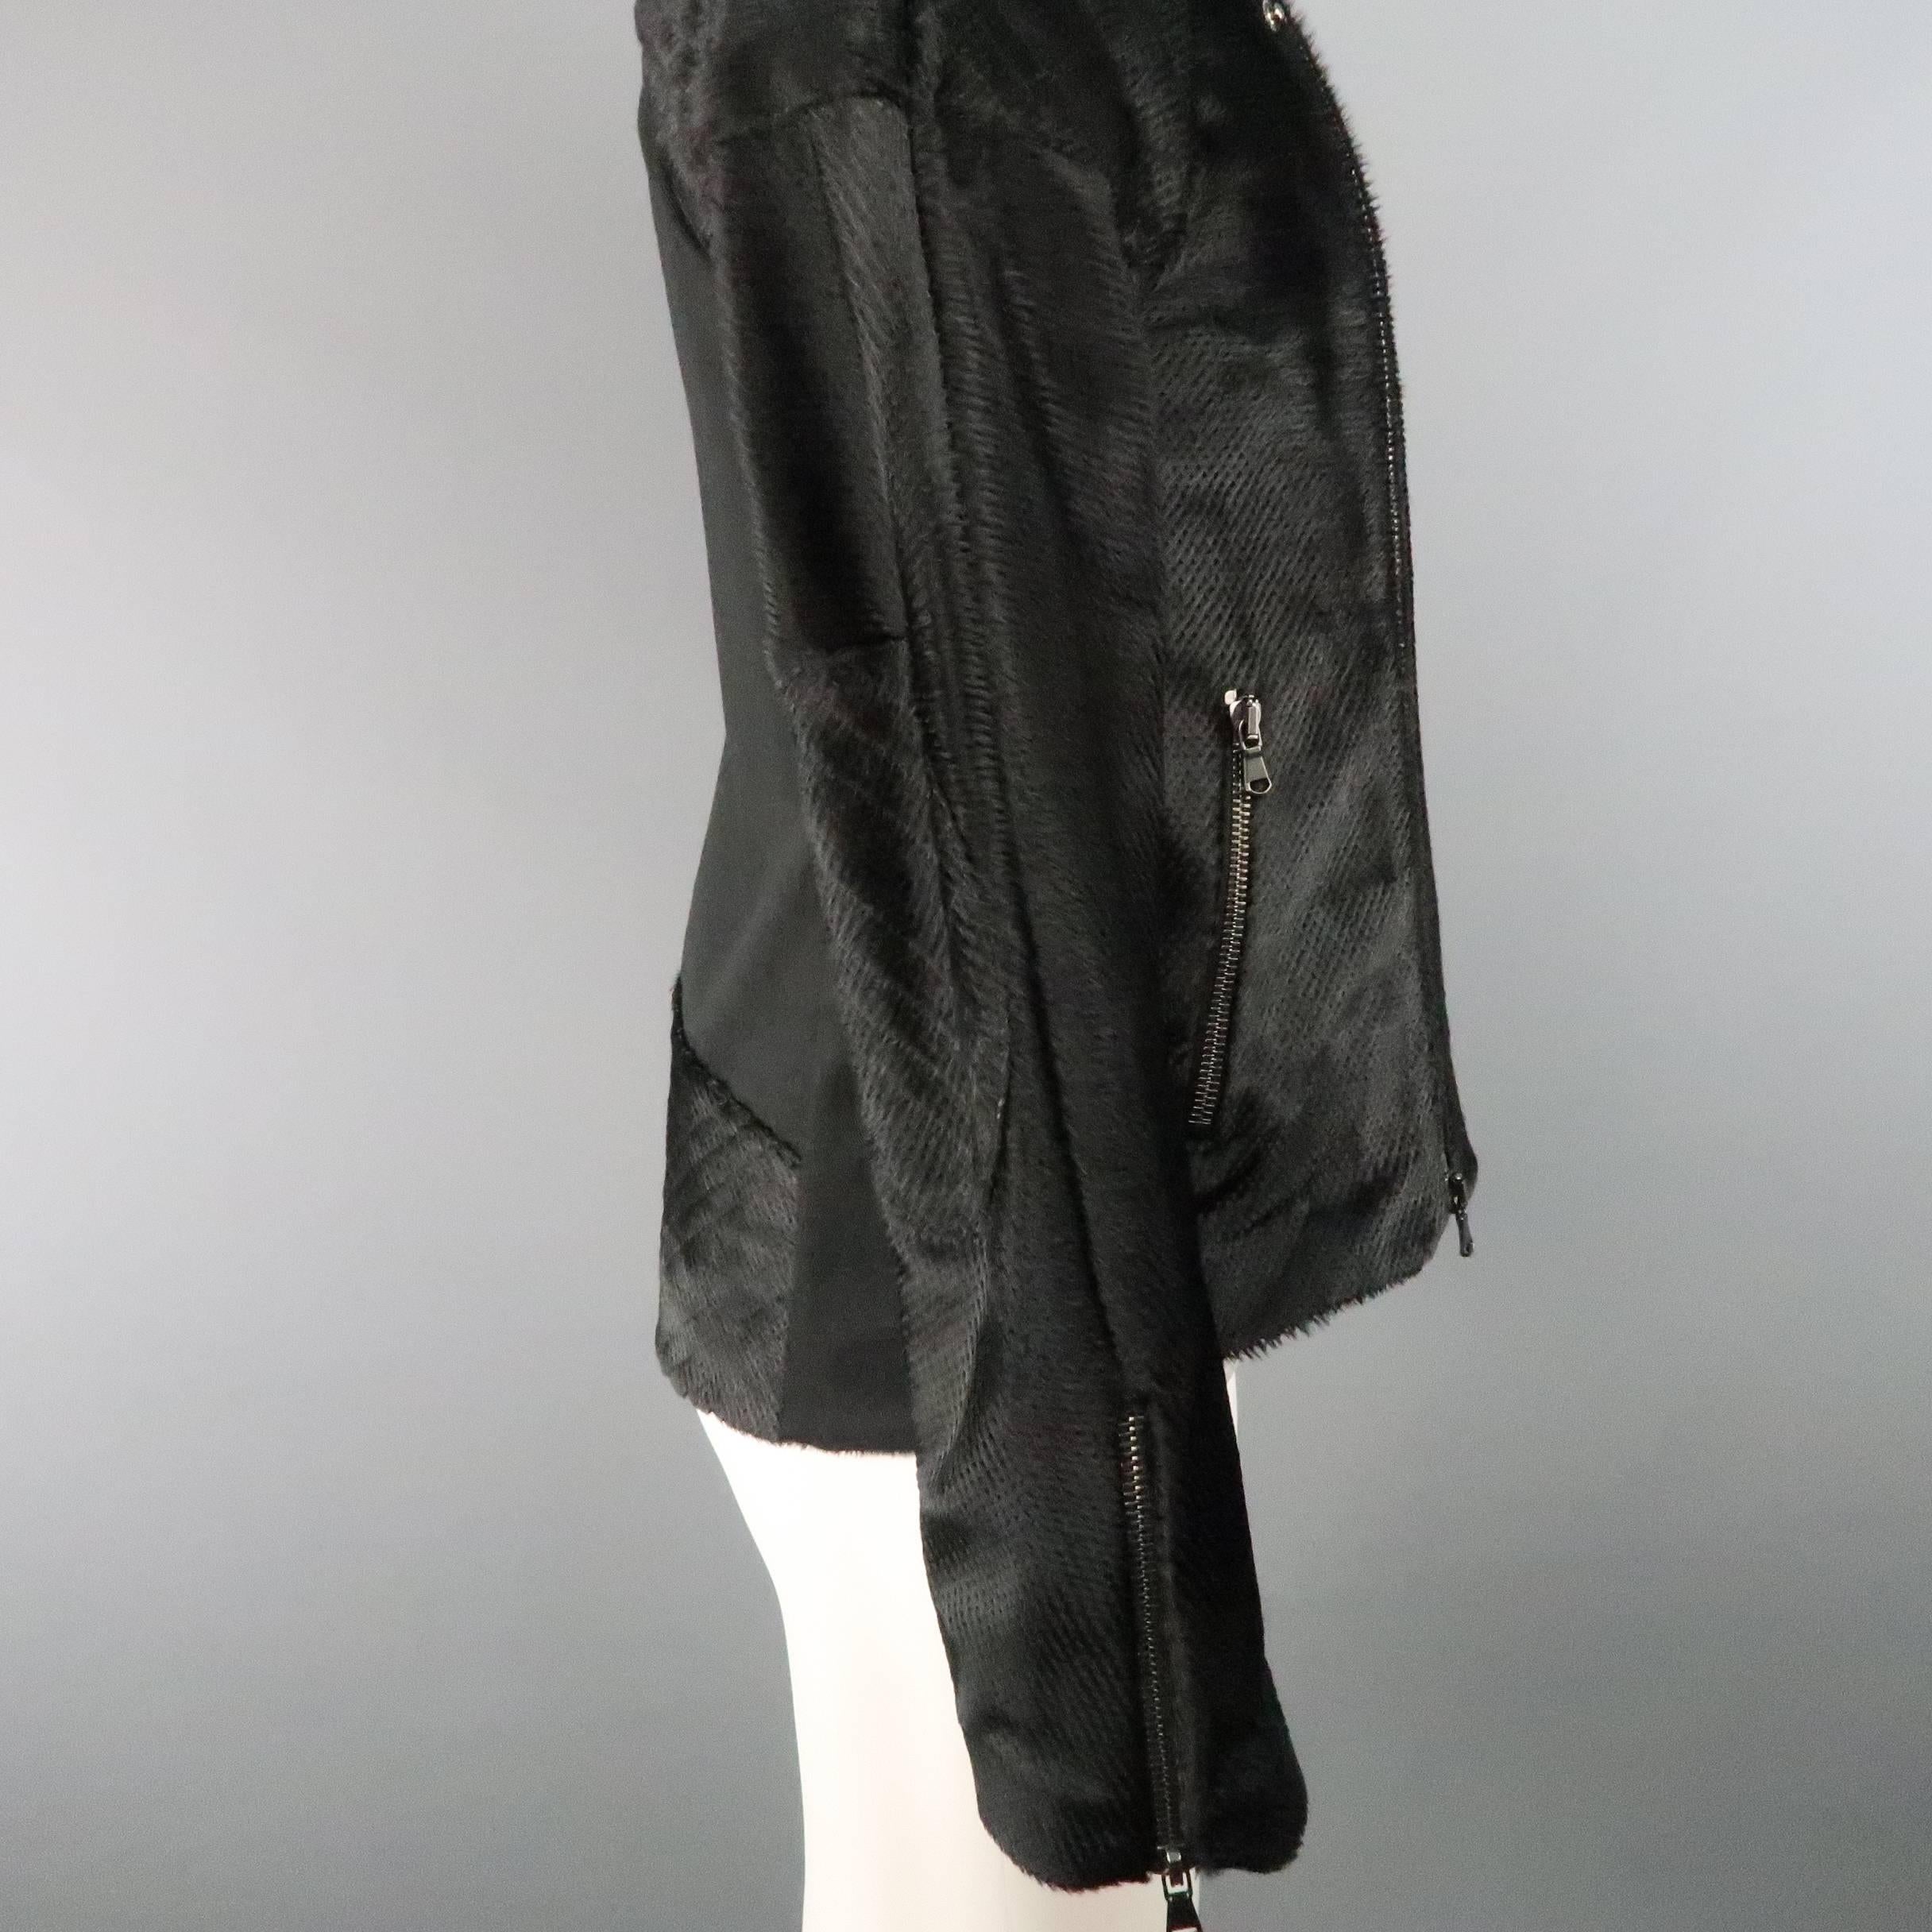 Women's or Men's Baja East Jacket - Black Perforated Ponyhair Leather, Motorcycle Coat